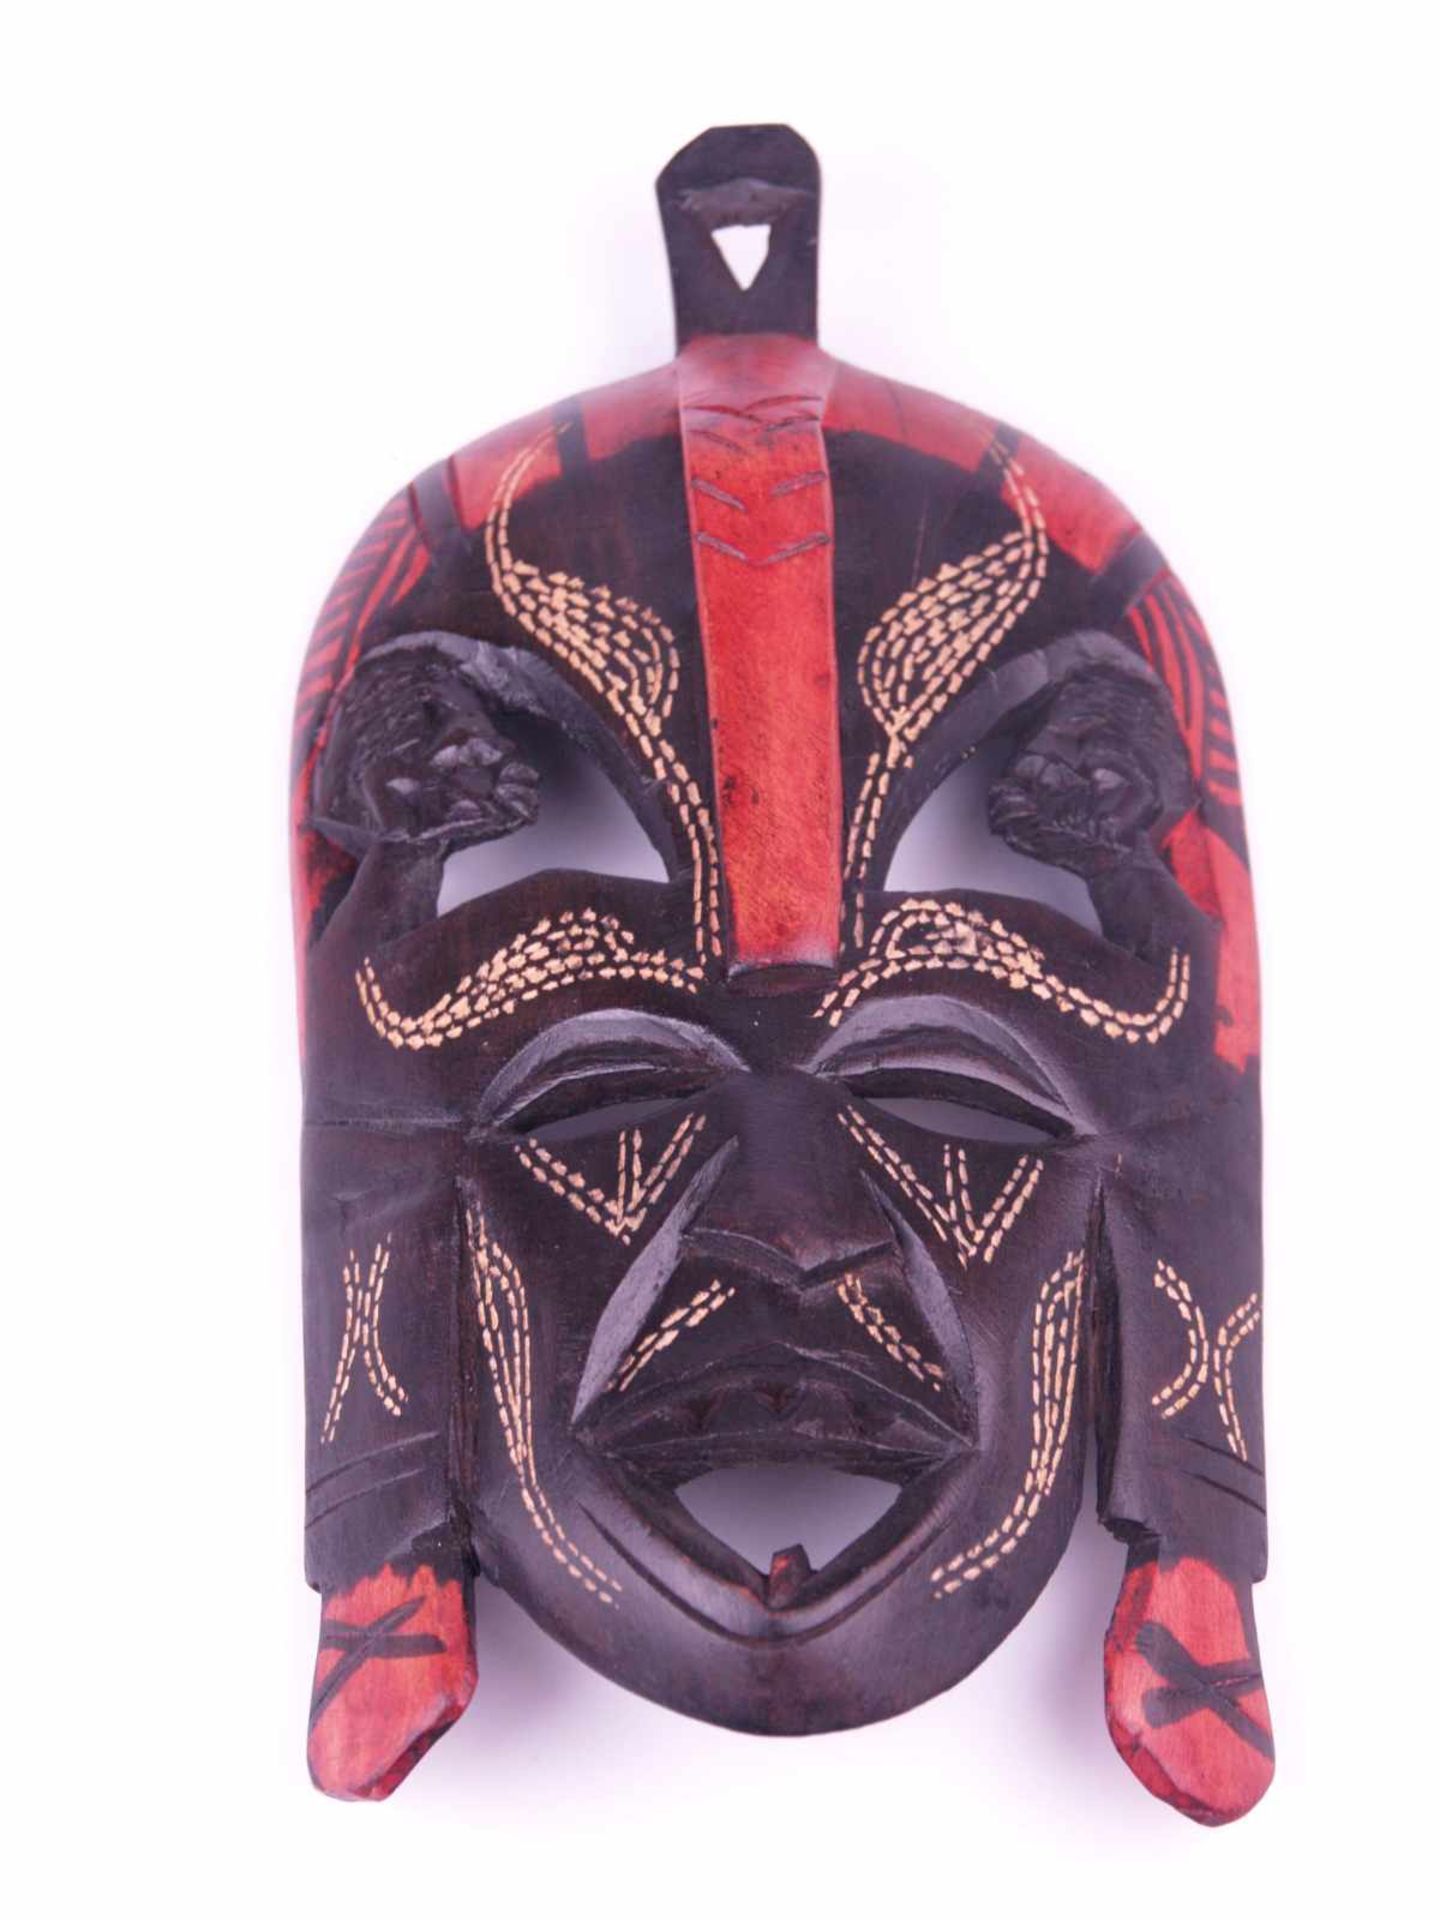 Gesichtsmaske- Kenia, Holz geschnitzt, schwarz/rot bemalt, rückseitig im Schnitt bez. "Jambo Kenya